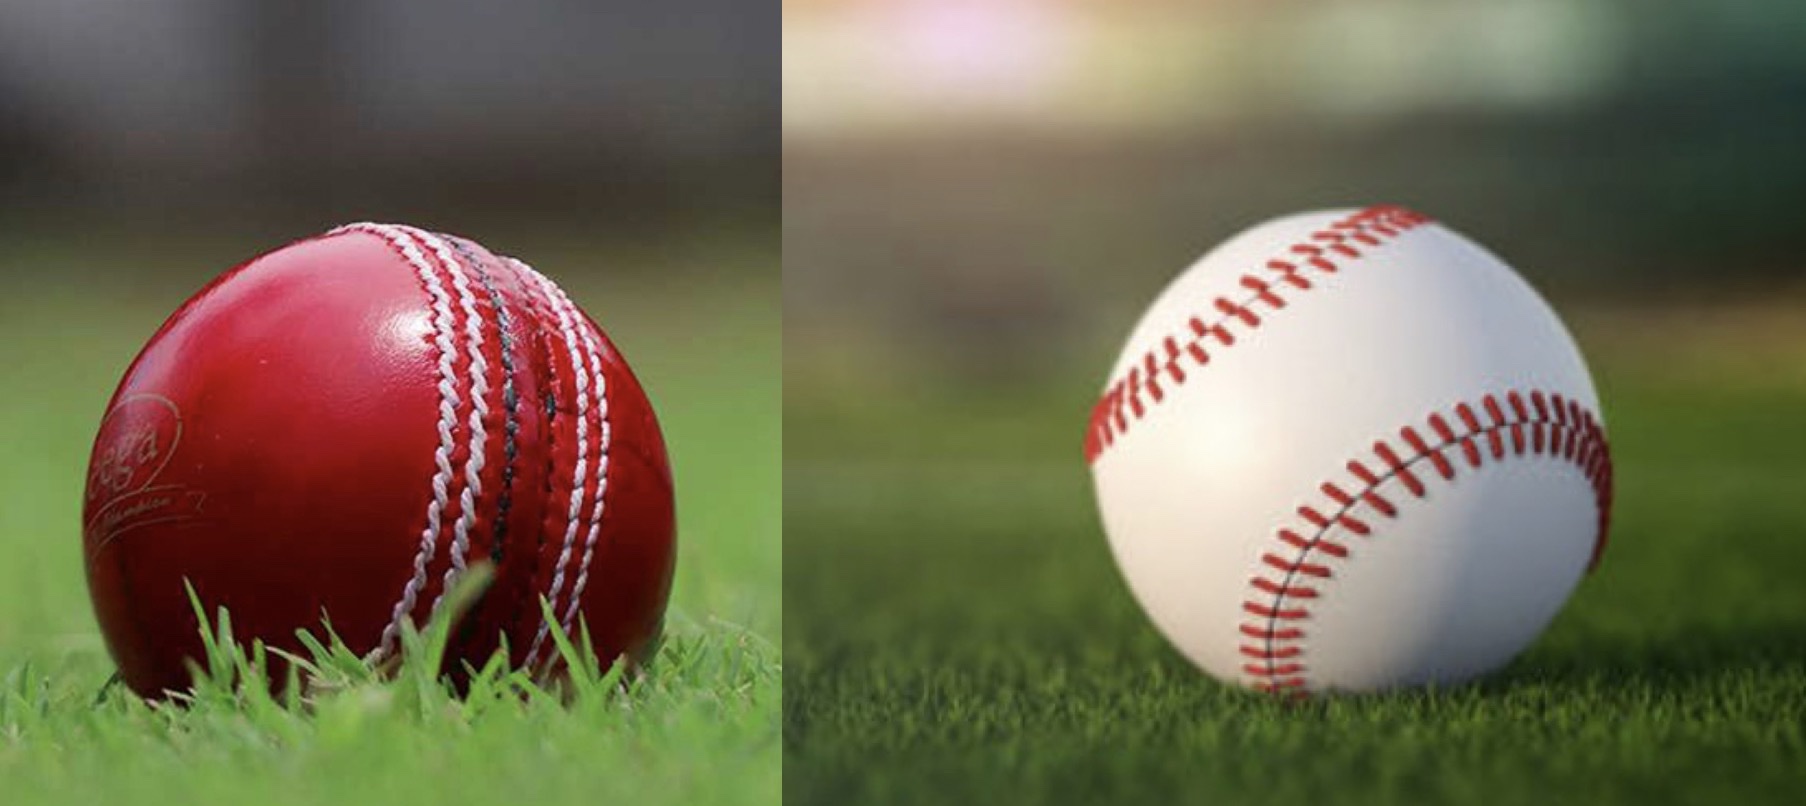 Baseballs and cricket balls damage solar panels